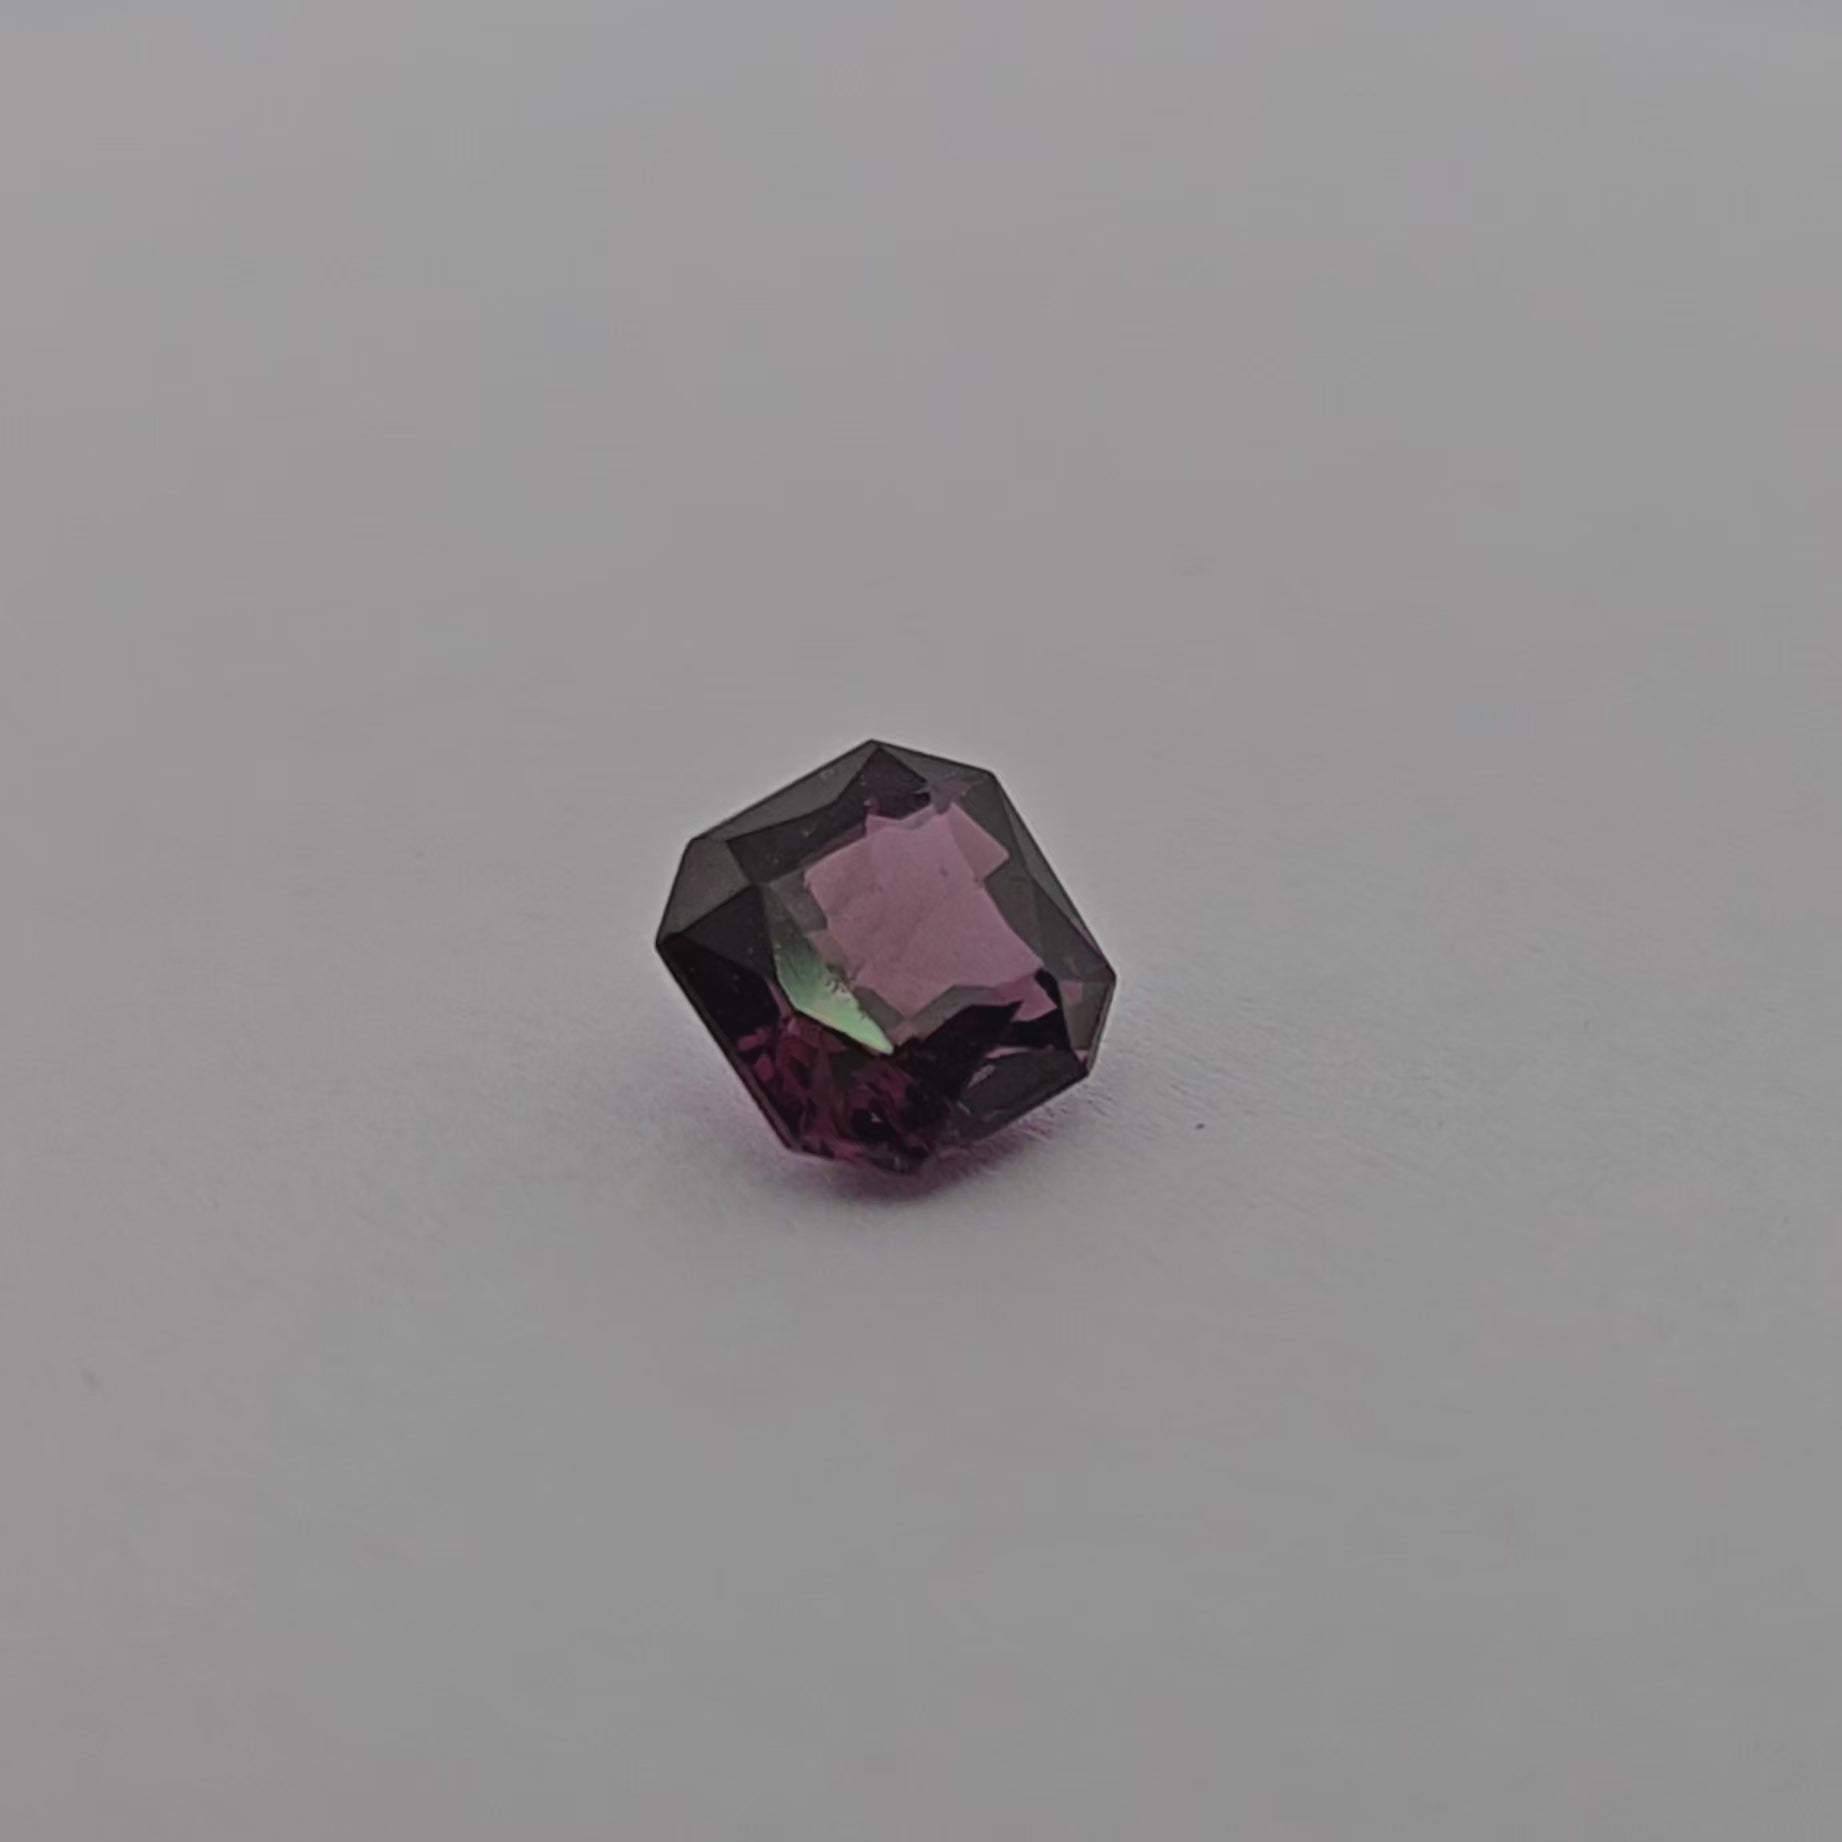 loose Natural Pink Spinel Stone 1.29 Carats Asscher Cut (6.2 mm)